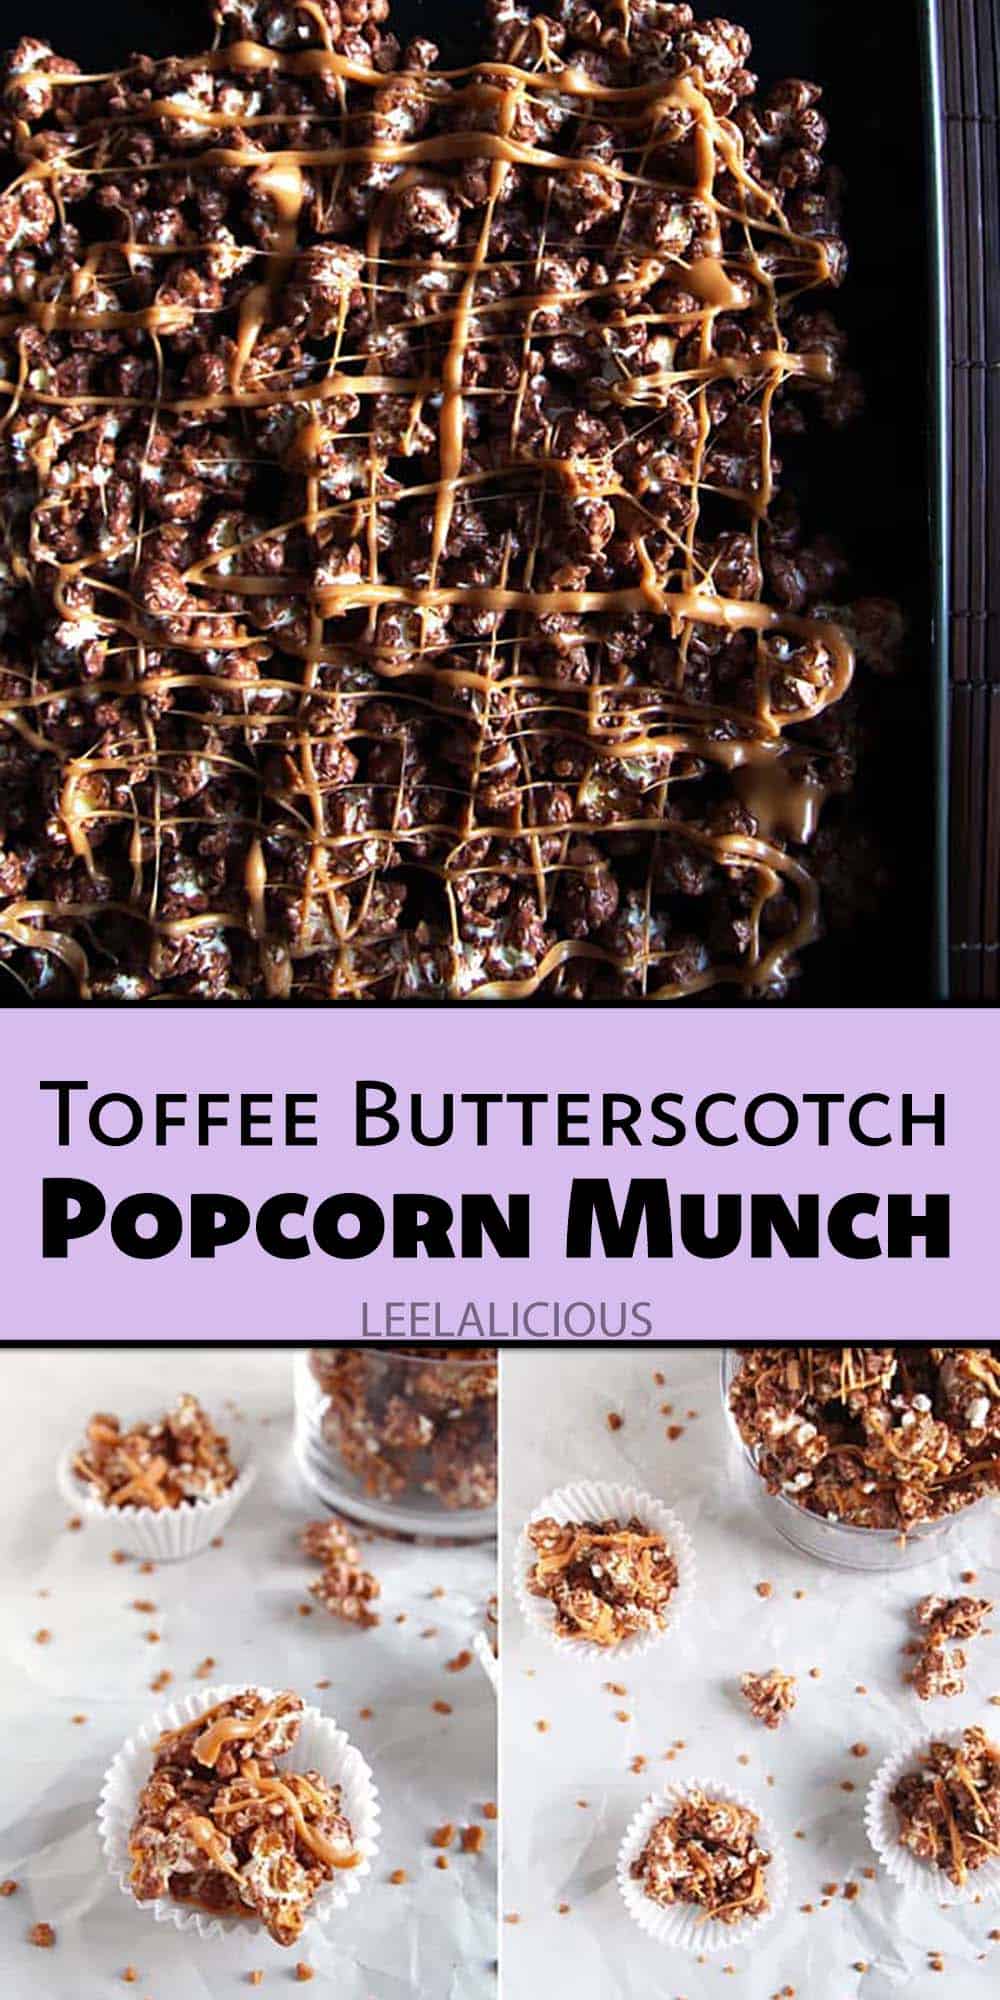 Toffee Butterscotch Popcorn Munch